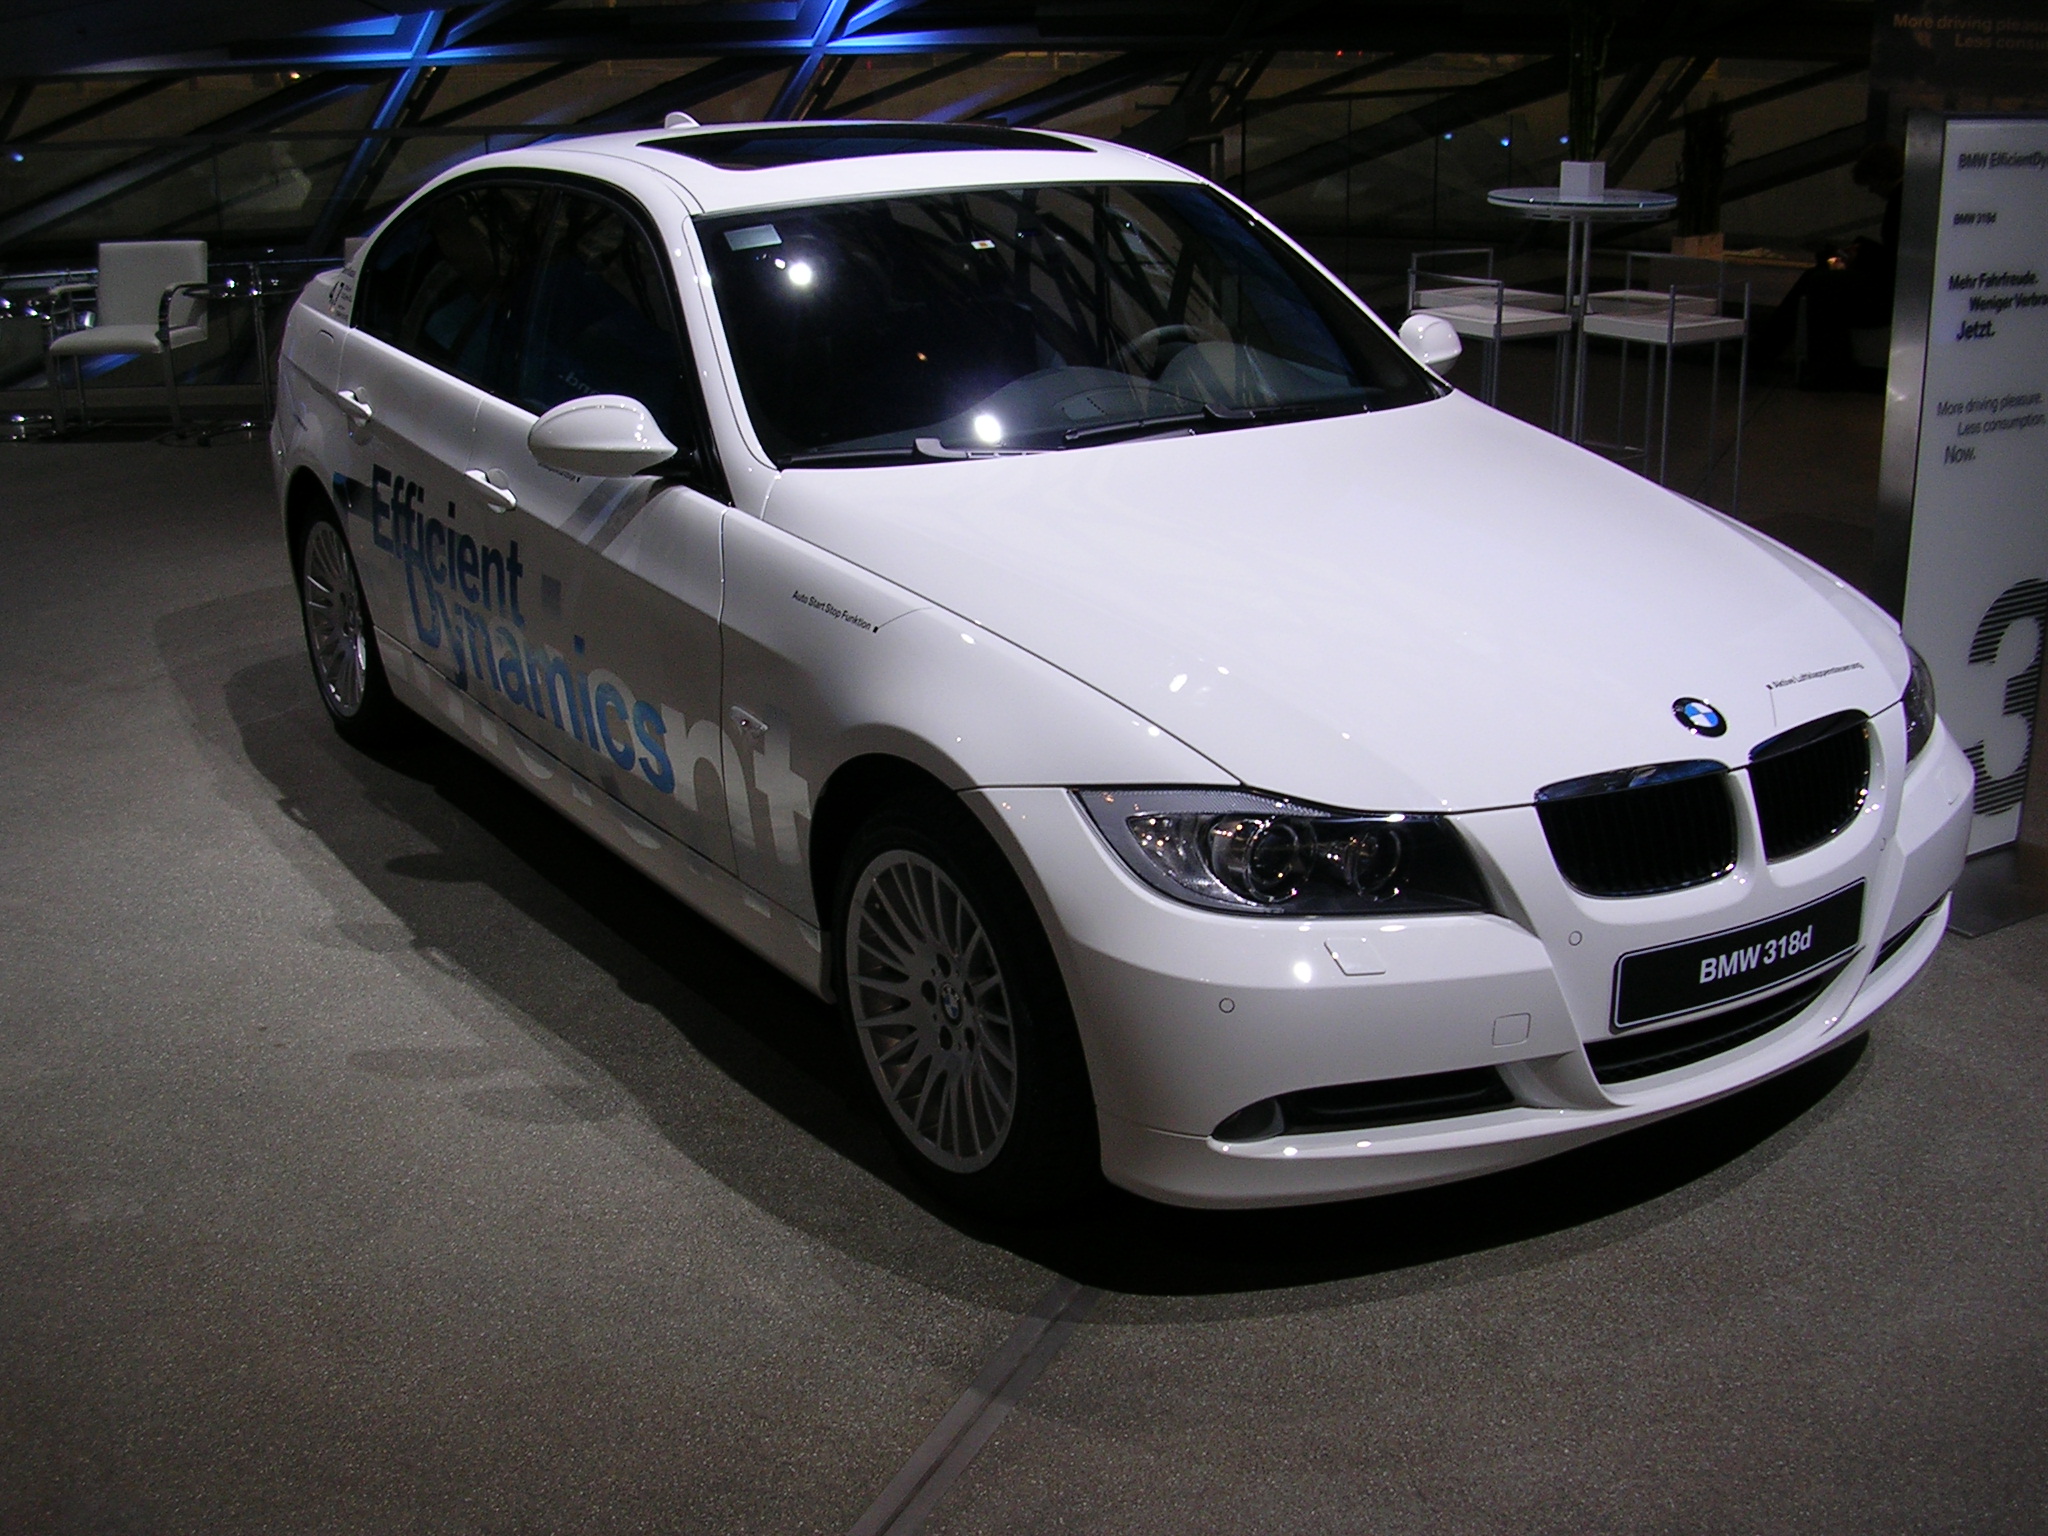 File:BMW G21 330e IMG 4346.jpg - Wikimedia Commons